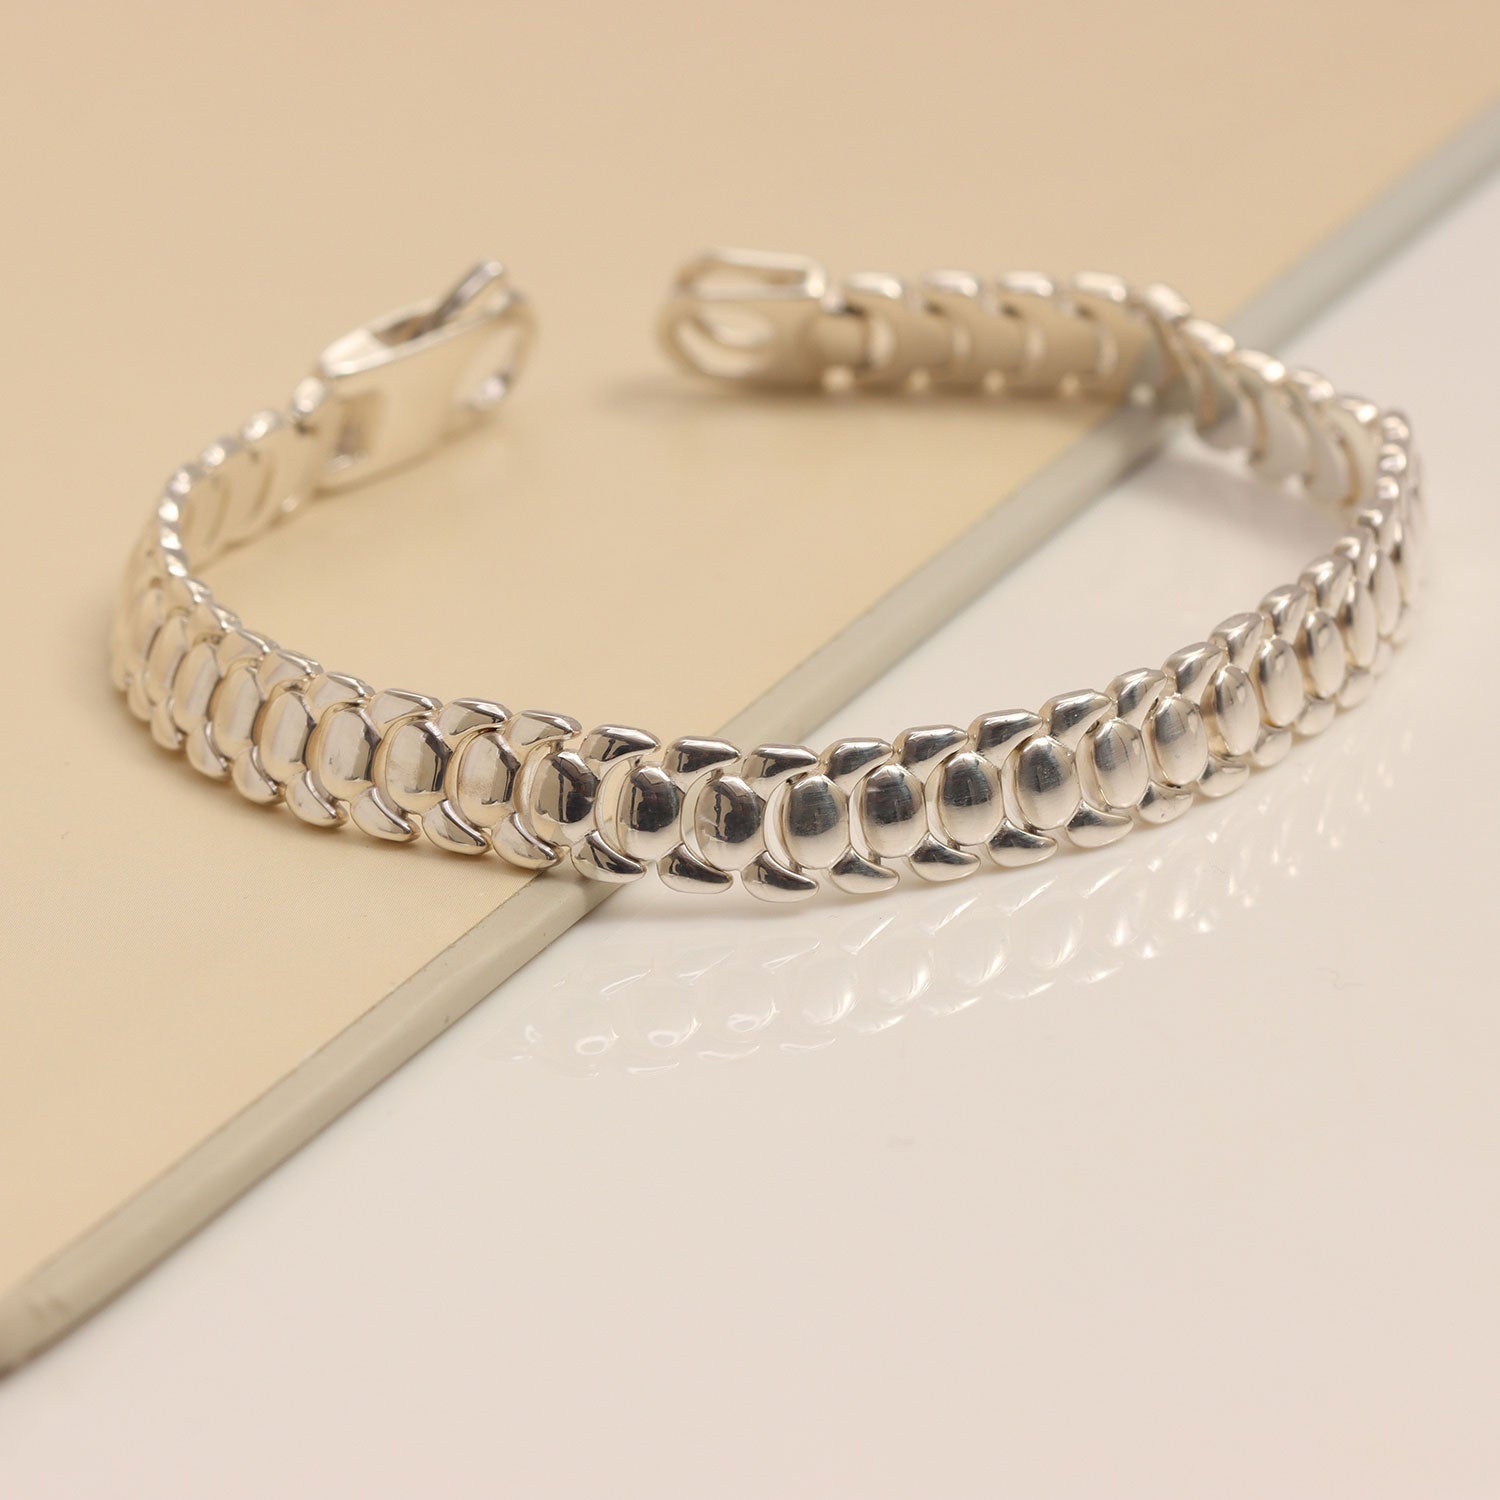 Shop for Sterling Silver Chain Bracelets - Lifesutram